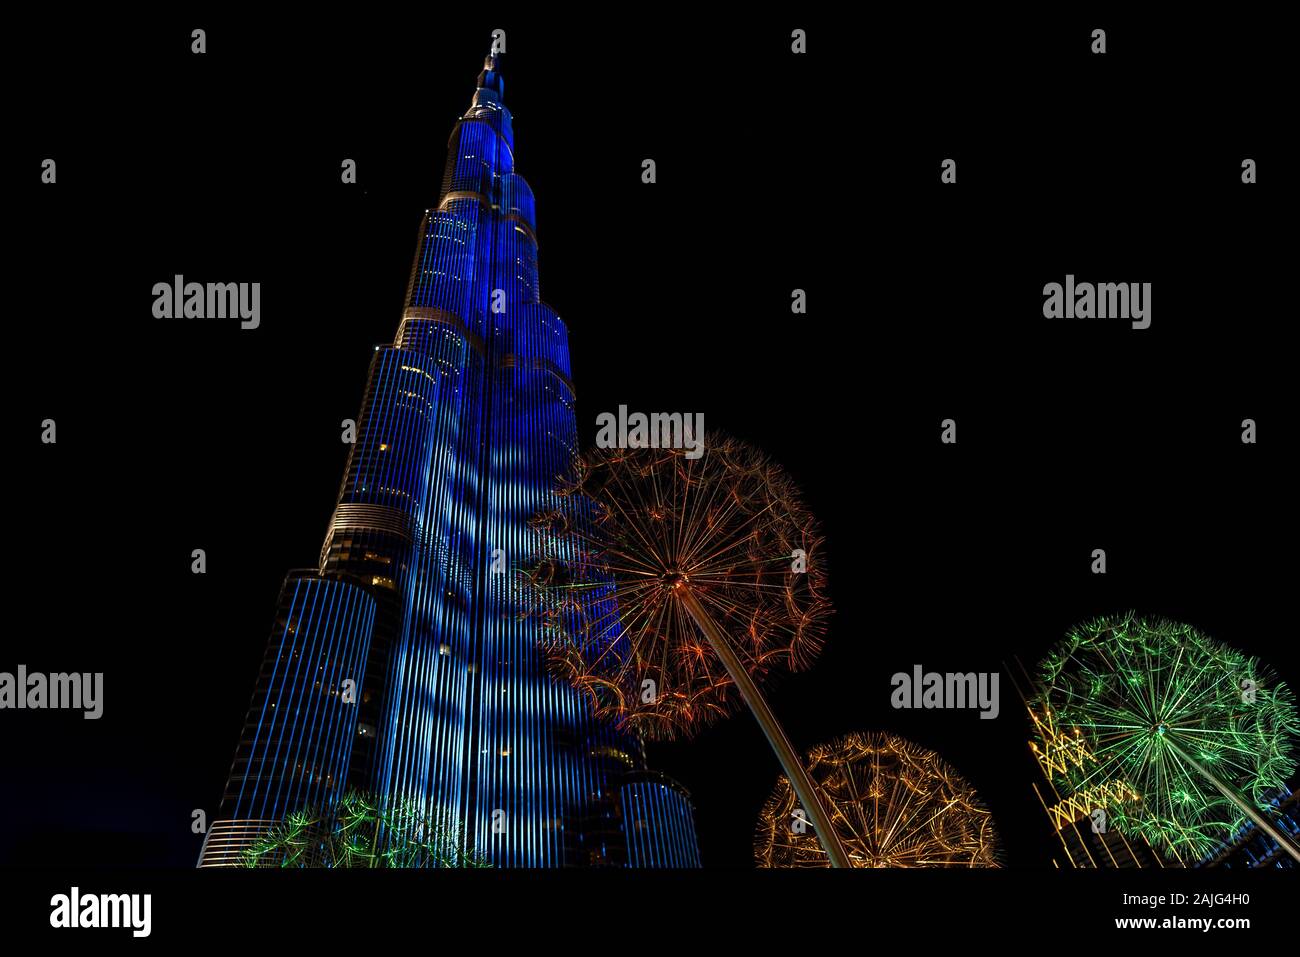 Dubai, United Arab Emirates: futuristic light show on Burj Khalifa, tallest building skyscraper in the world, by night, illuminated, from ground level Stock Photo